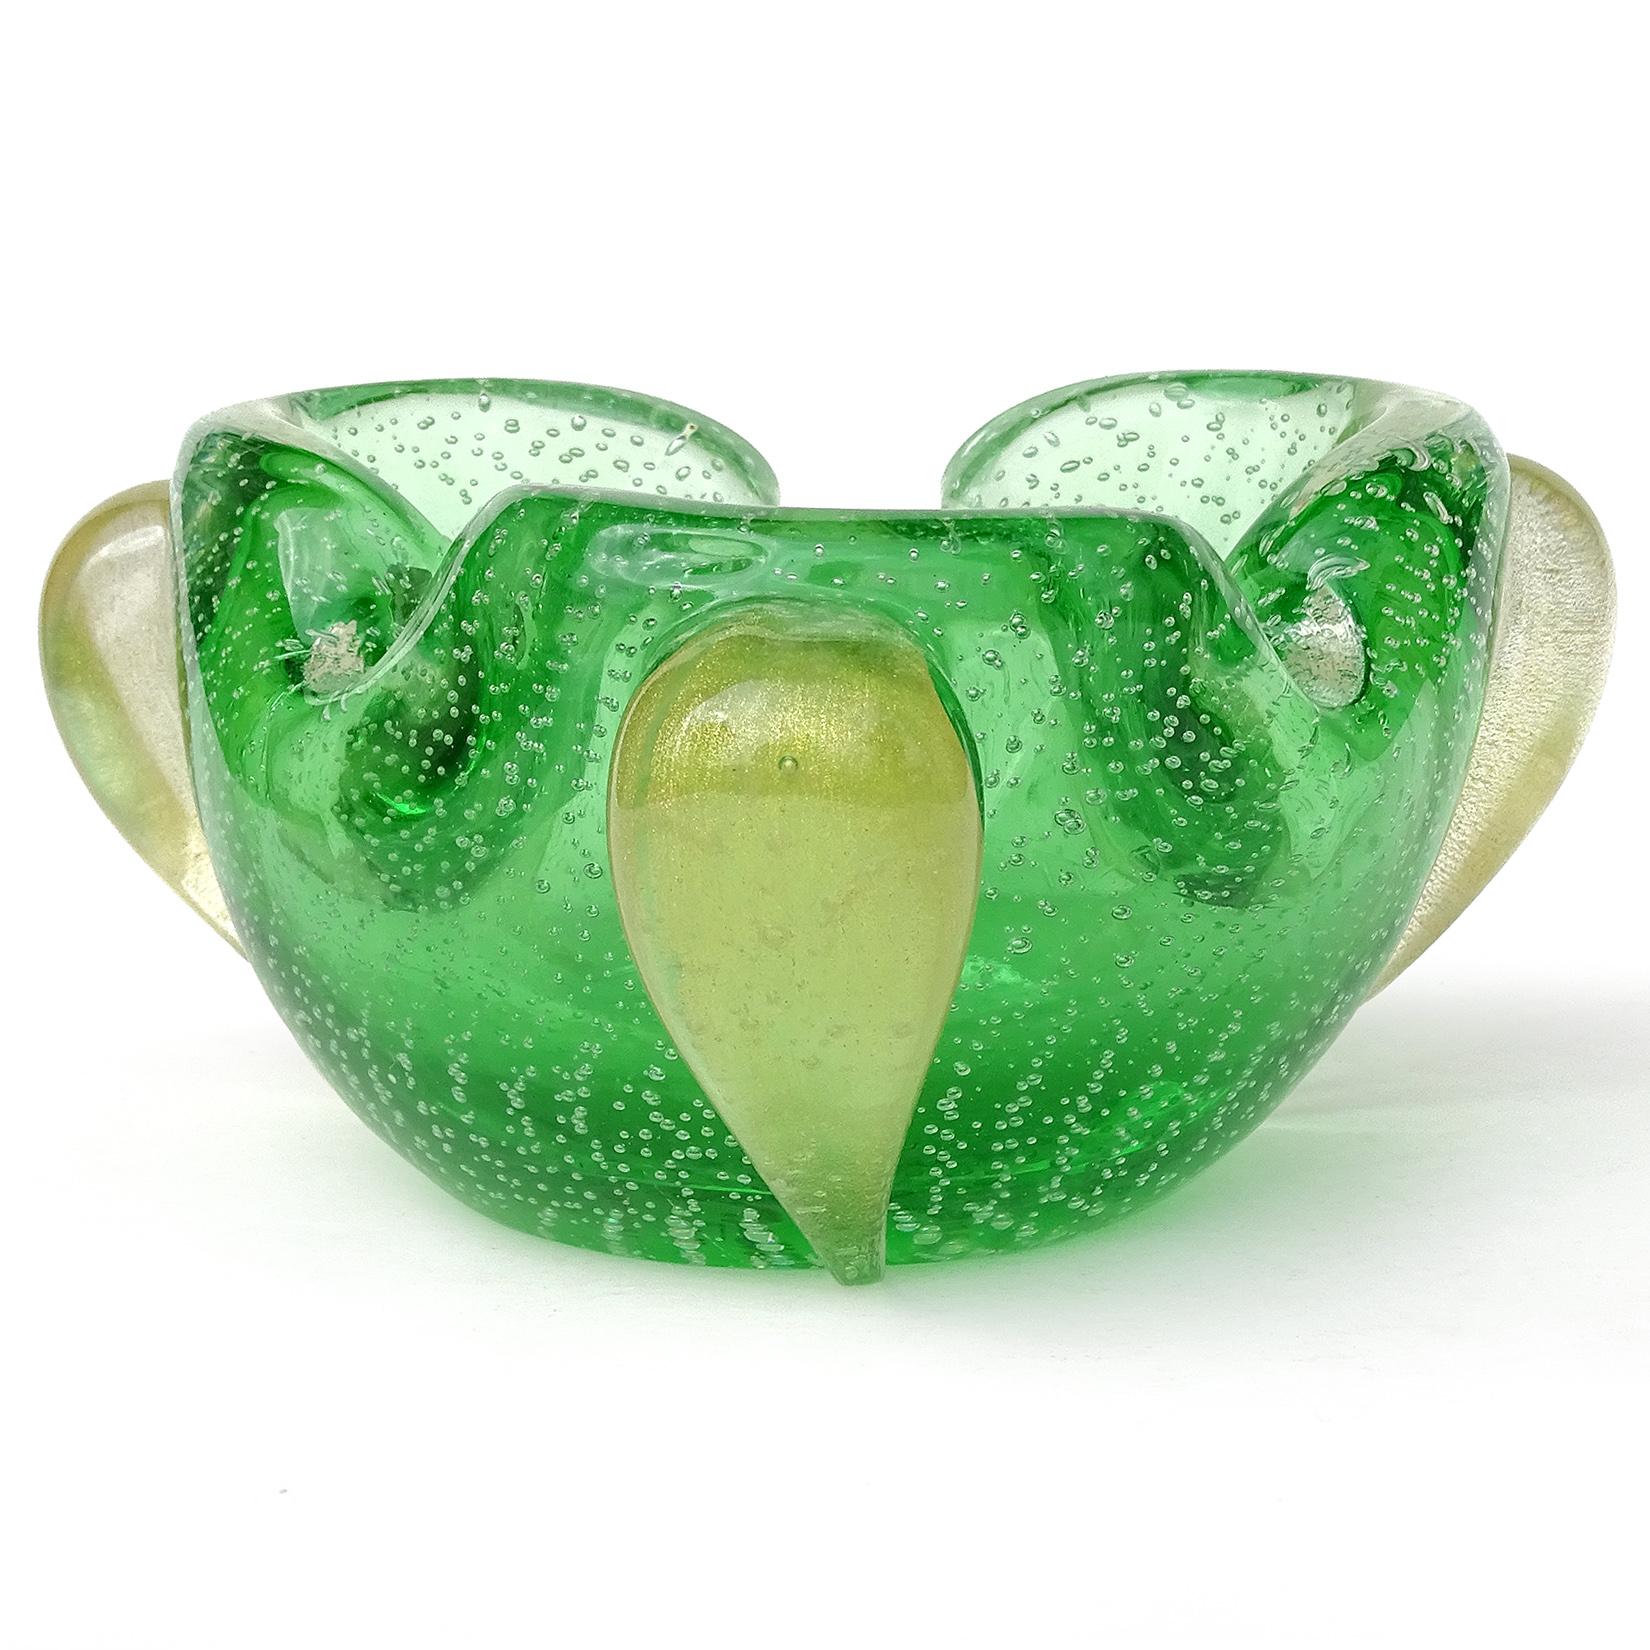 Beautiful Murano handblown Sommerso green, gold flecks and controlled bubbles Italian art glass bowl / ashtray. Documented to designer Flavio Poli and Archimede Seguso for Seguso Vetri d'Arte, circa 1930-1940s. Created in the 